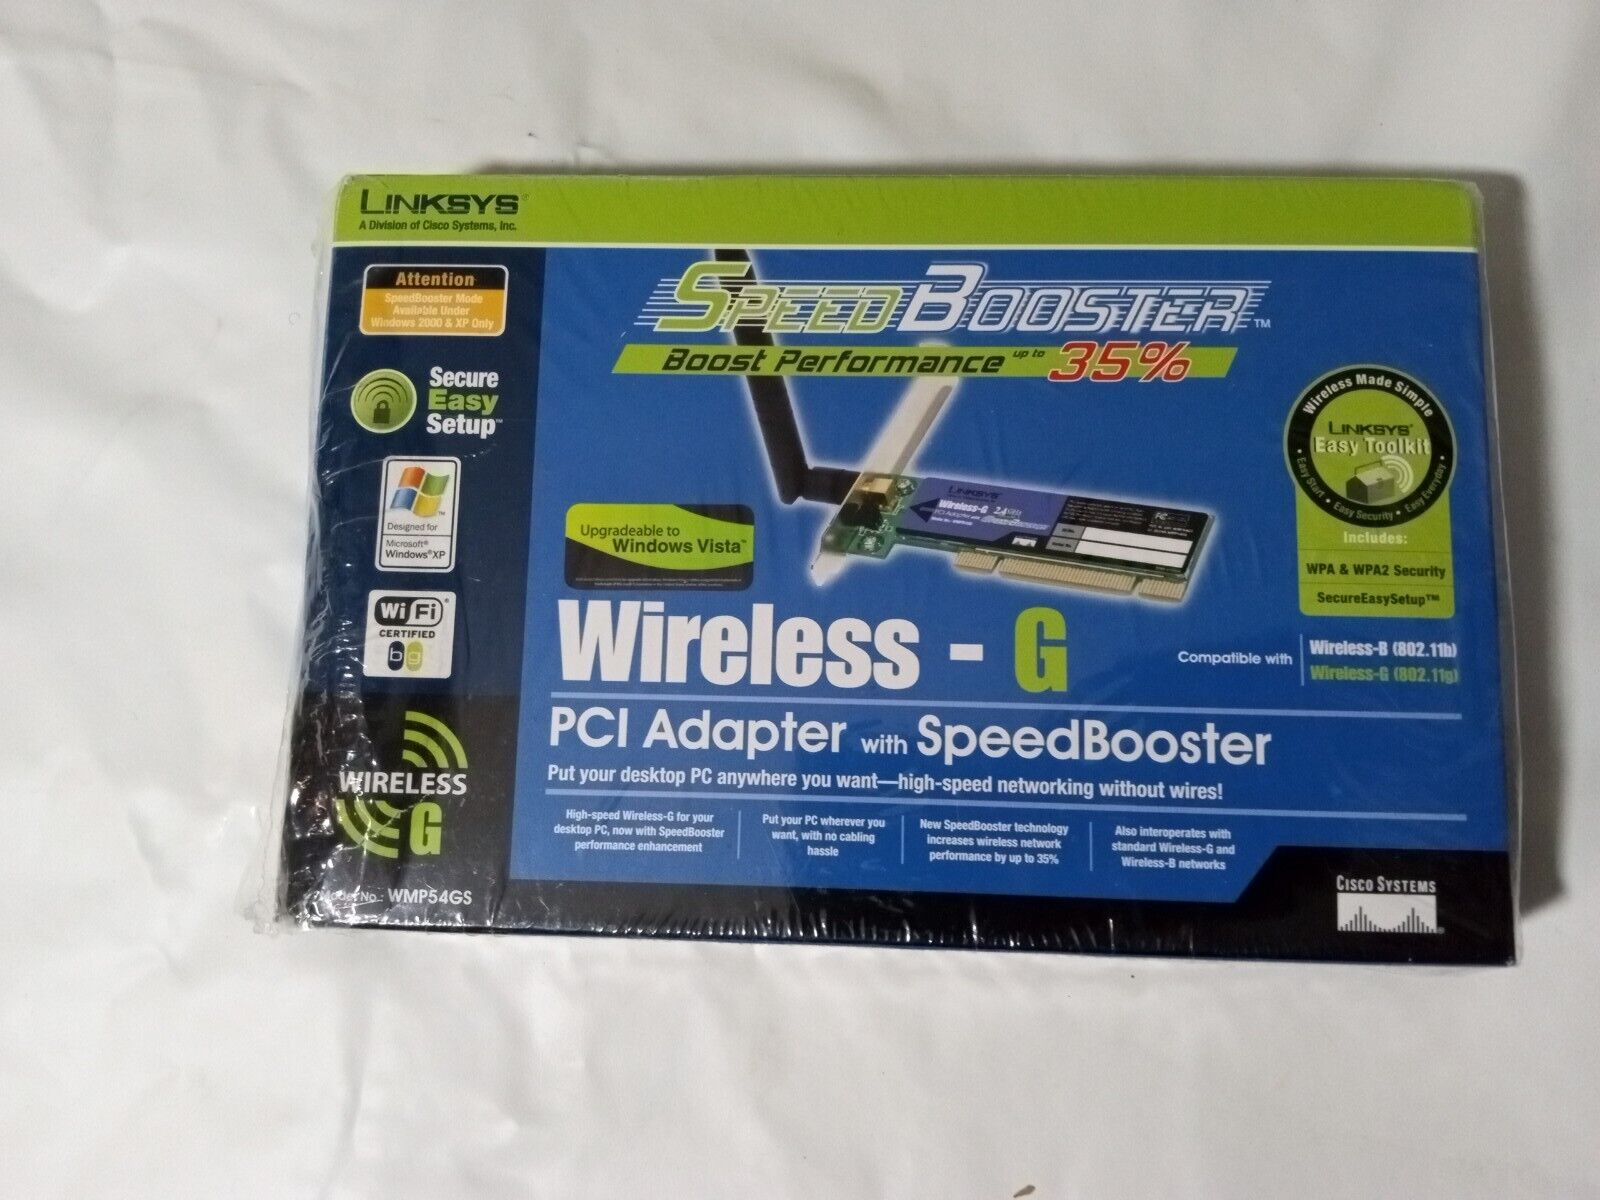 Linksys WMP54GS 2.4GHz Wireless-G PCI Adapter with SpeedBooster